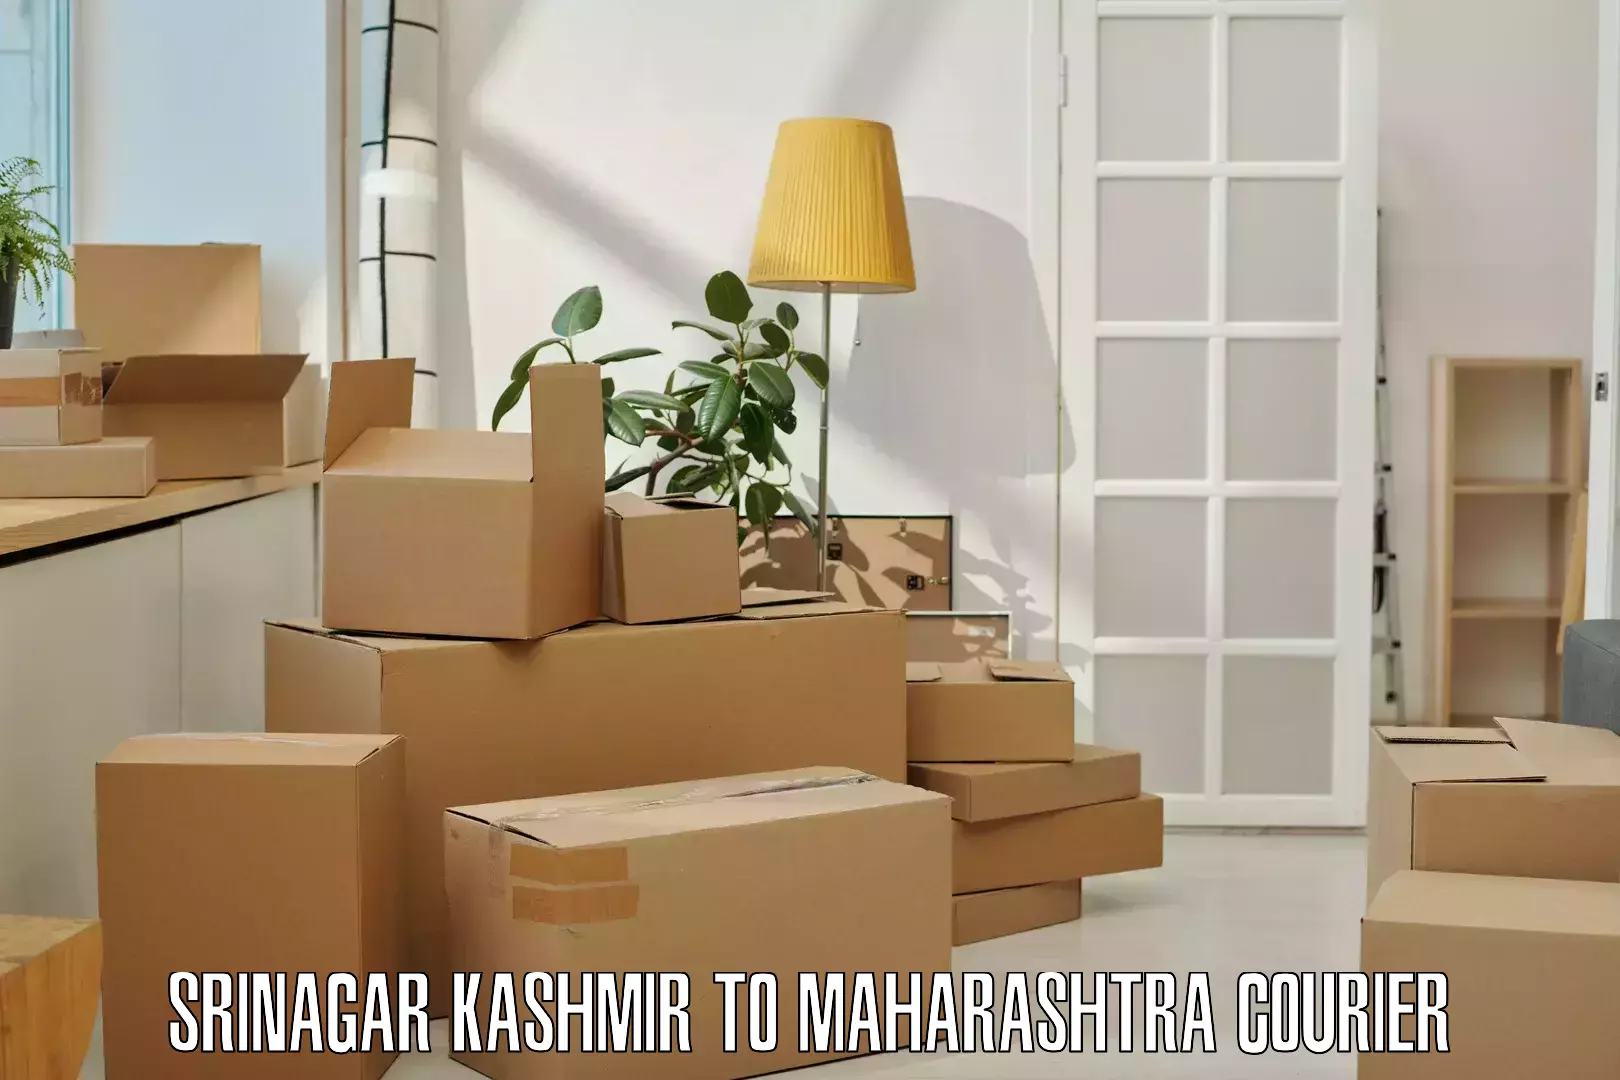 User-friendly courier app Srinagar Kashmir to Maharashtra